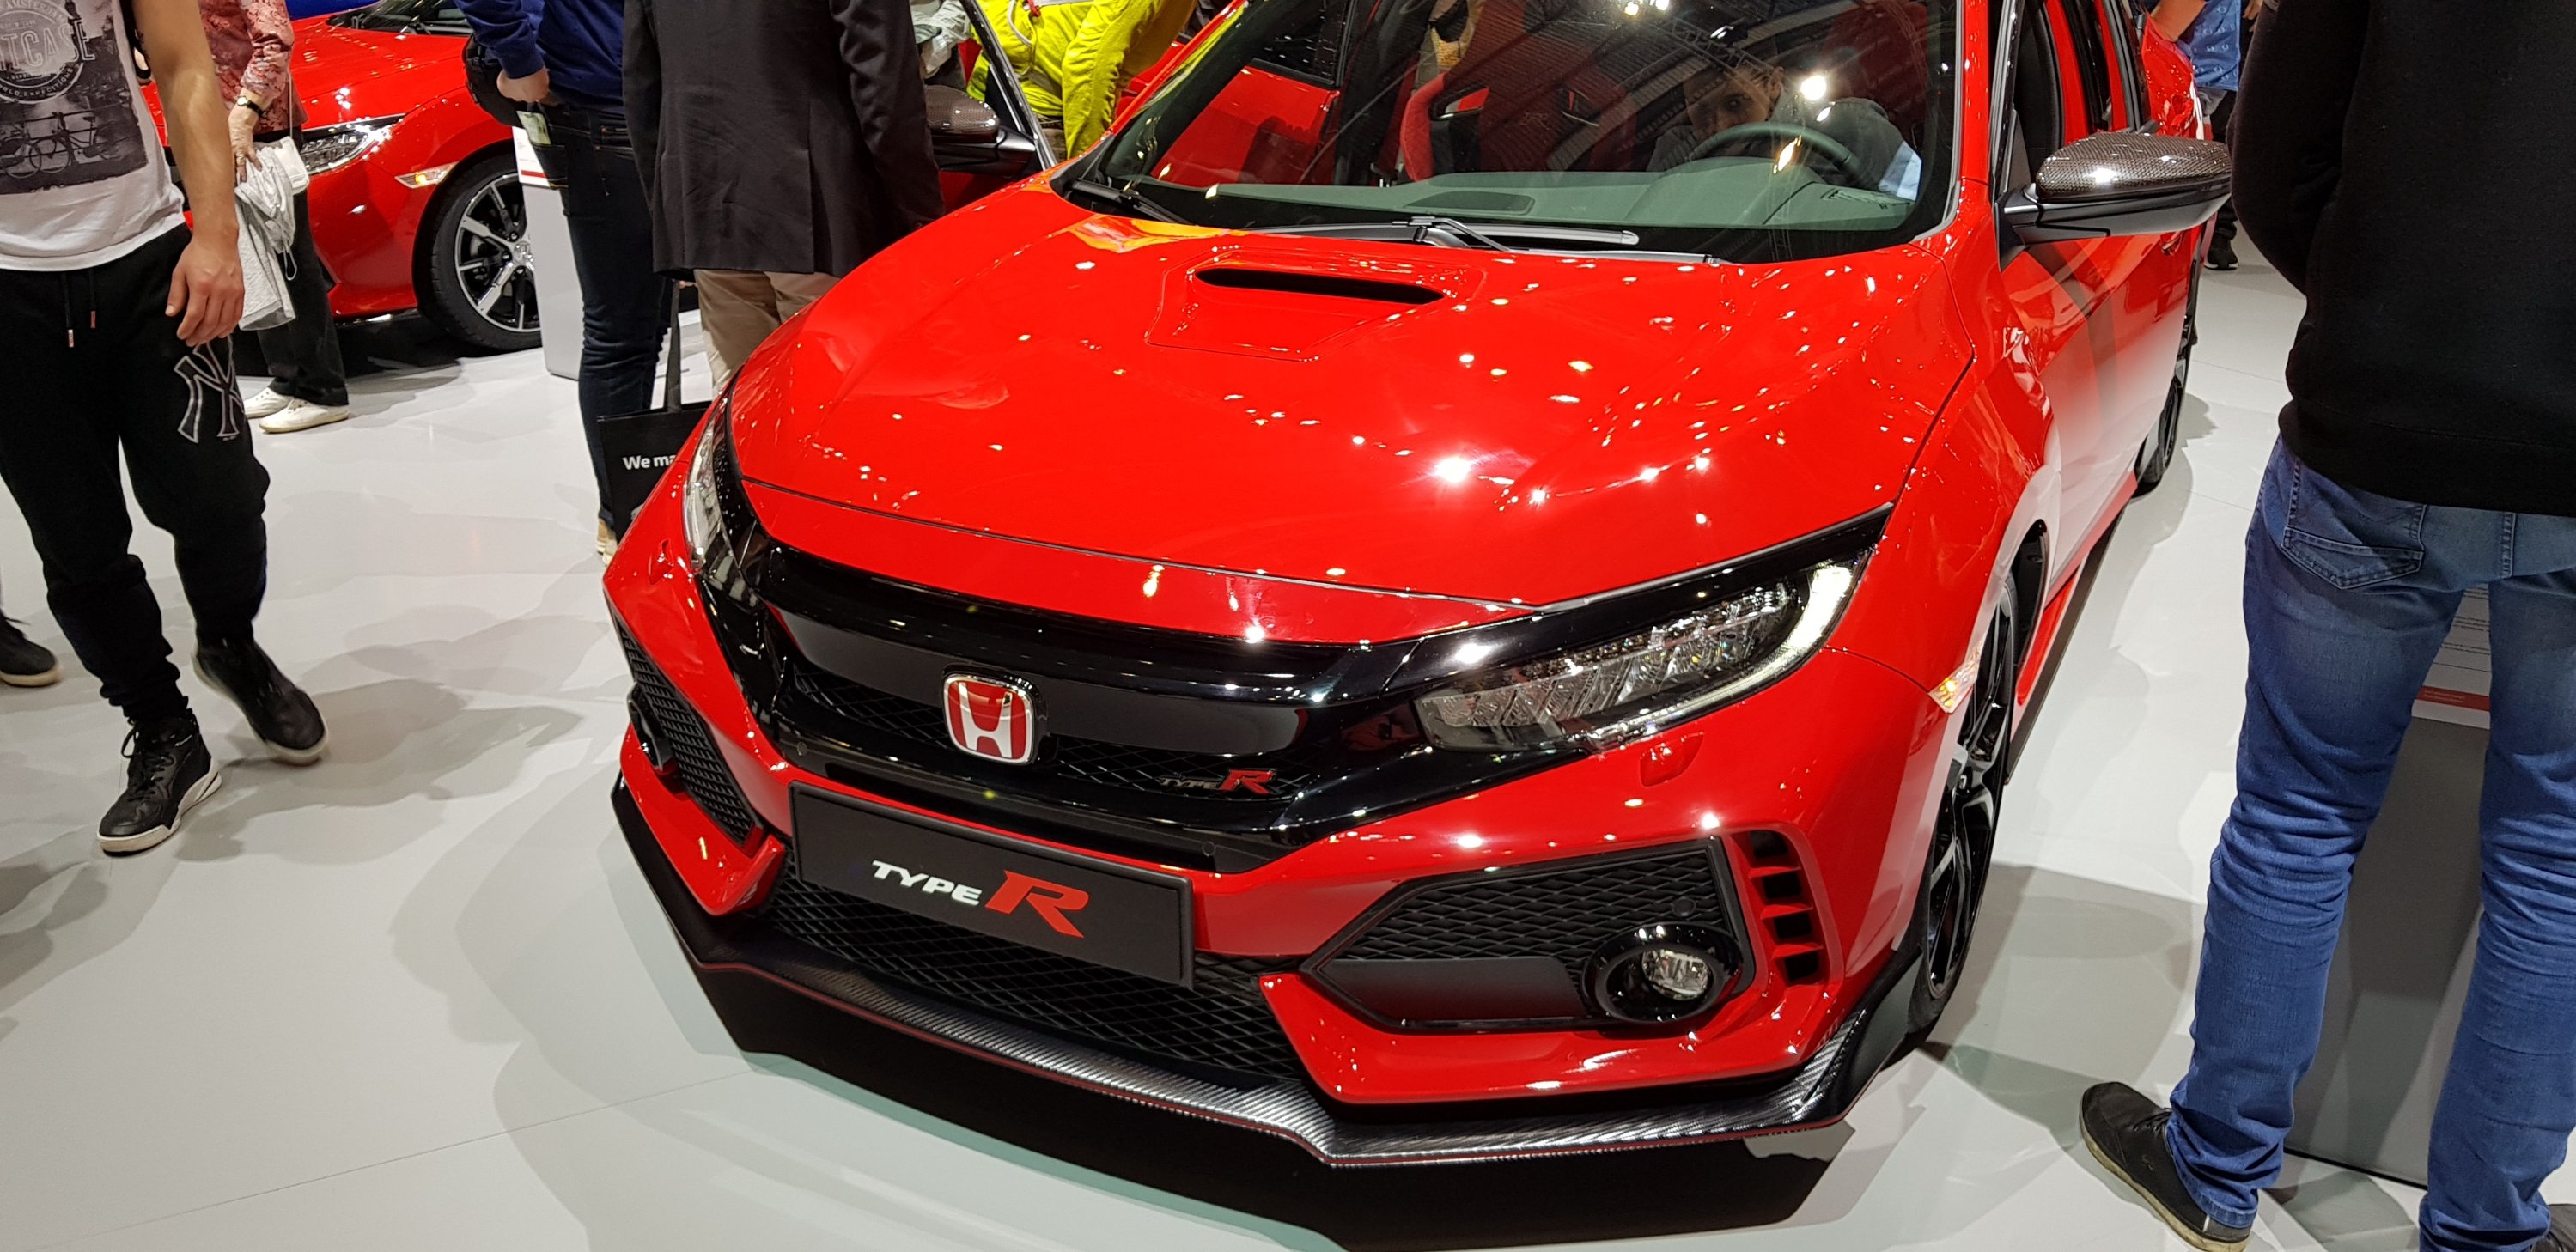 Honda Civic Type R (Front)